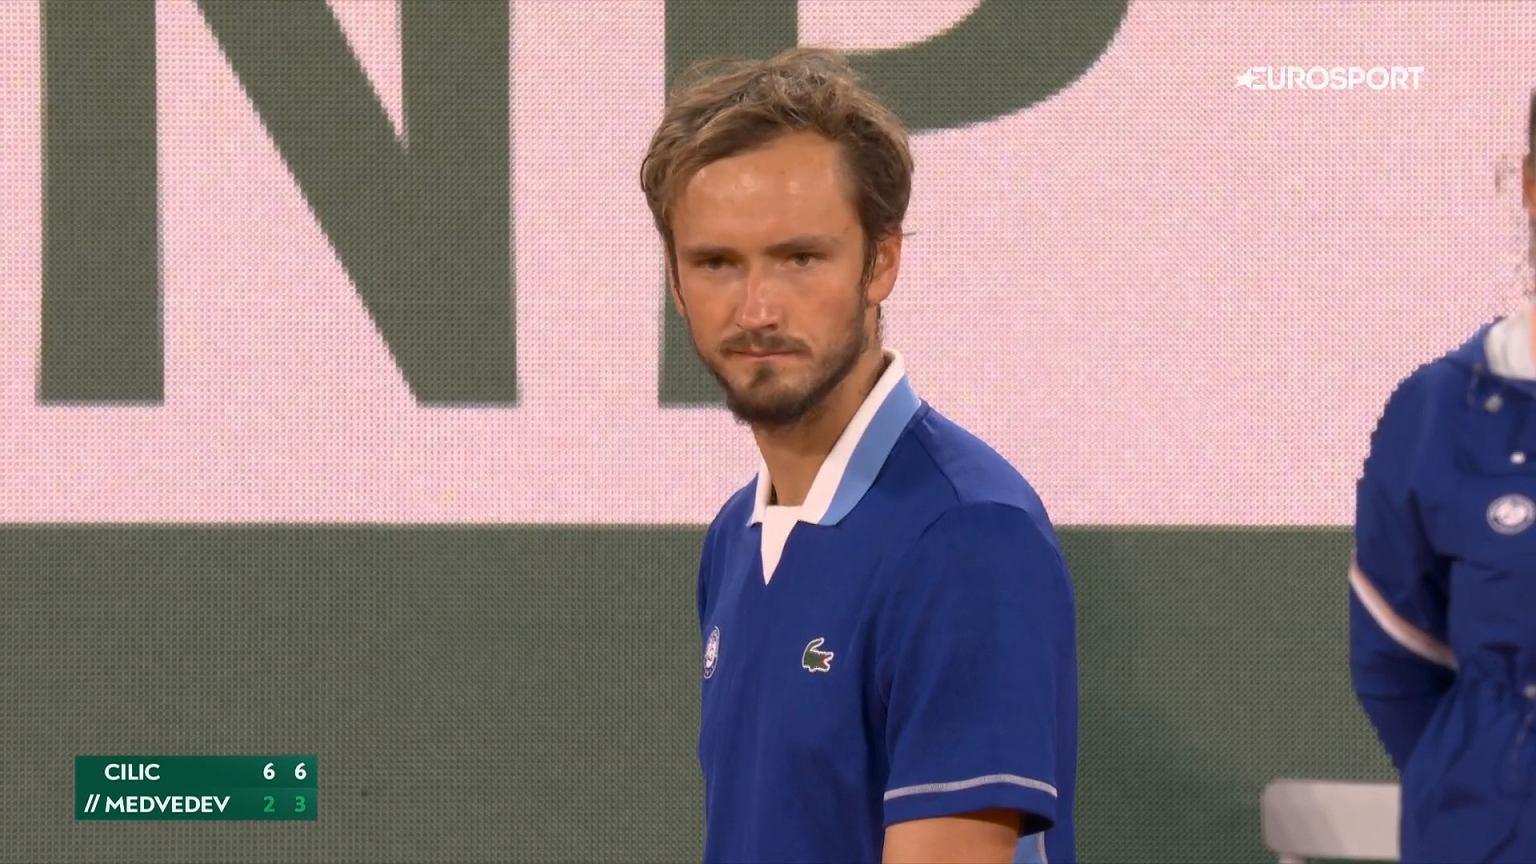 A sensation in Roland Garros.  Medvedev was eliminated for accompanying tennis whistles